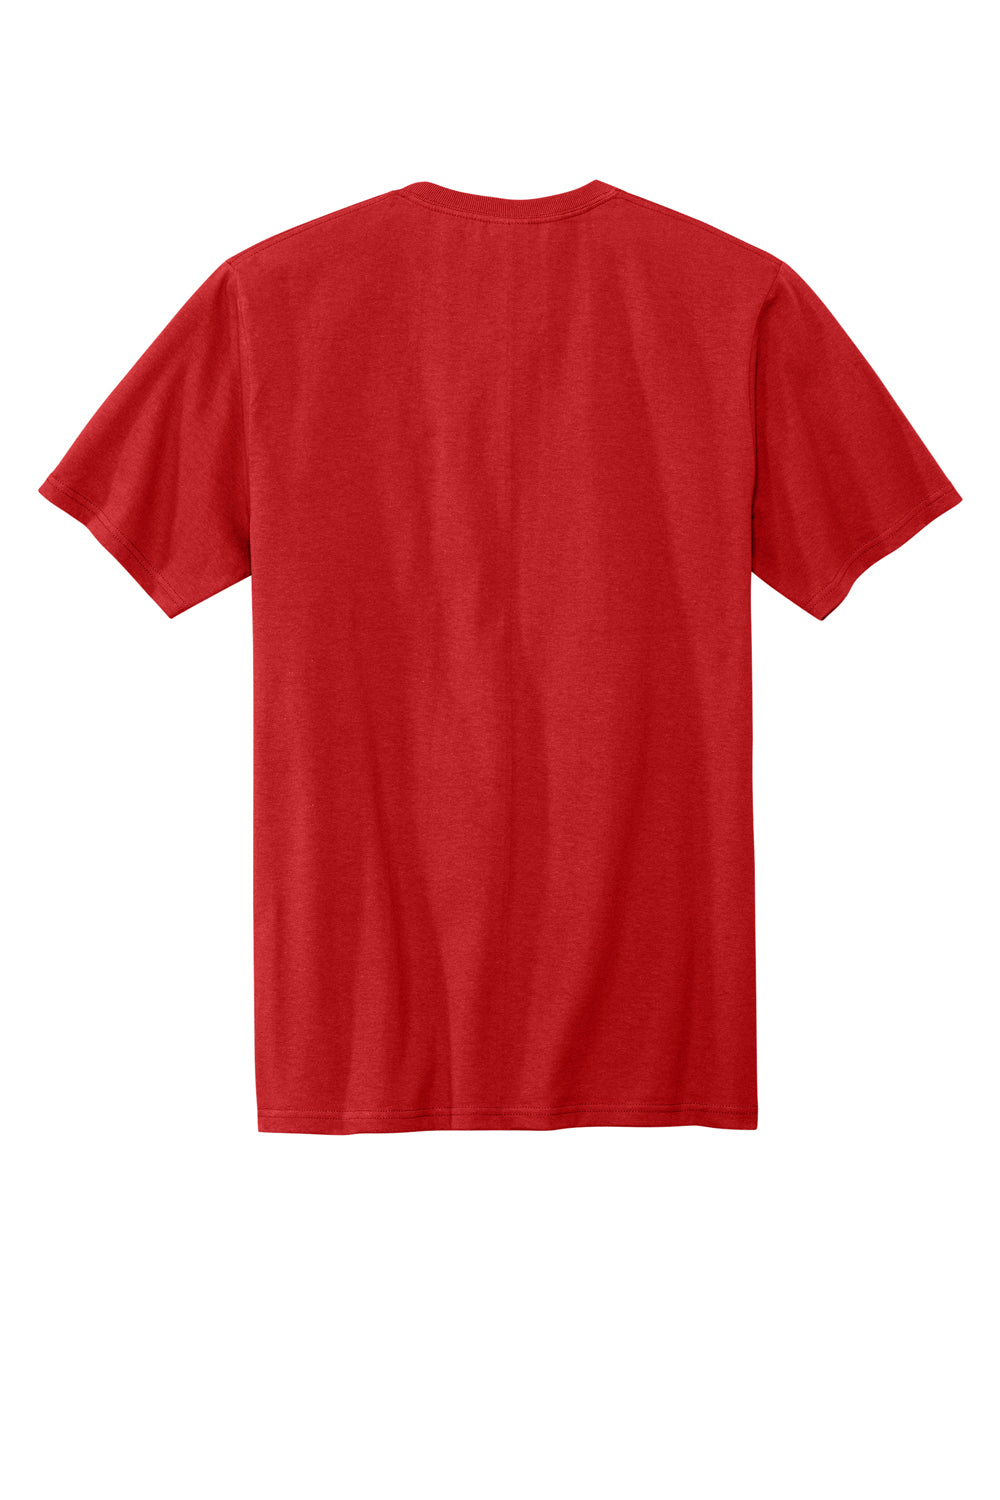 Volunteer Knitwear VL100 USA Made All American Short Sleeve Crewneck T-Shirts Flag Red Flat Back